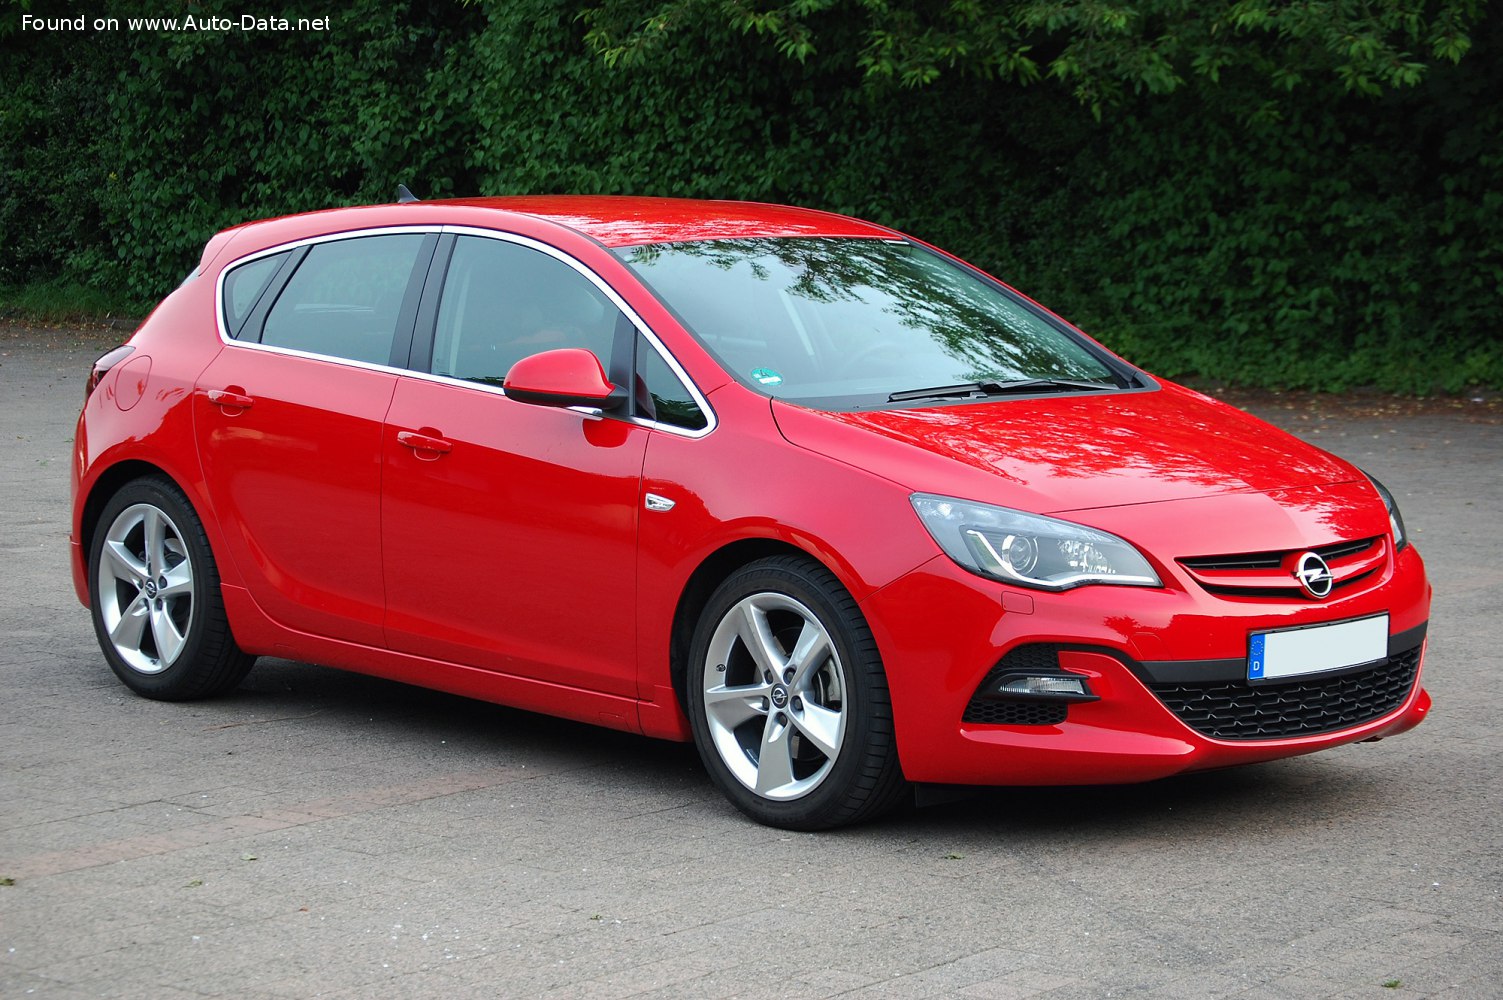 https://www.auto-data.net/images/f107/Opel-Astra-J-facelift-2012.jpg